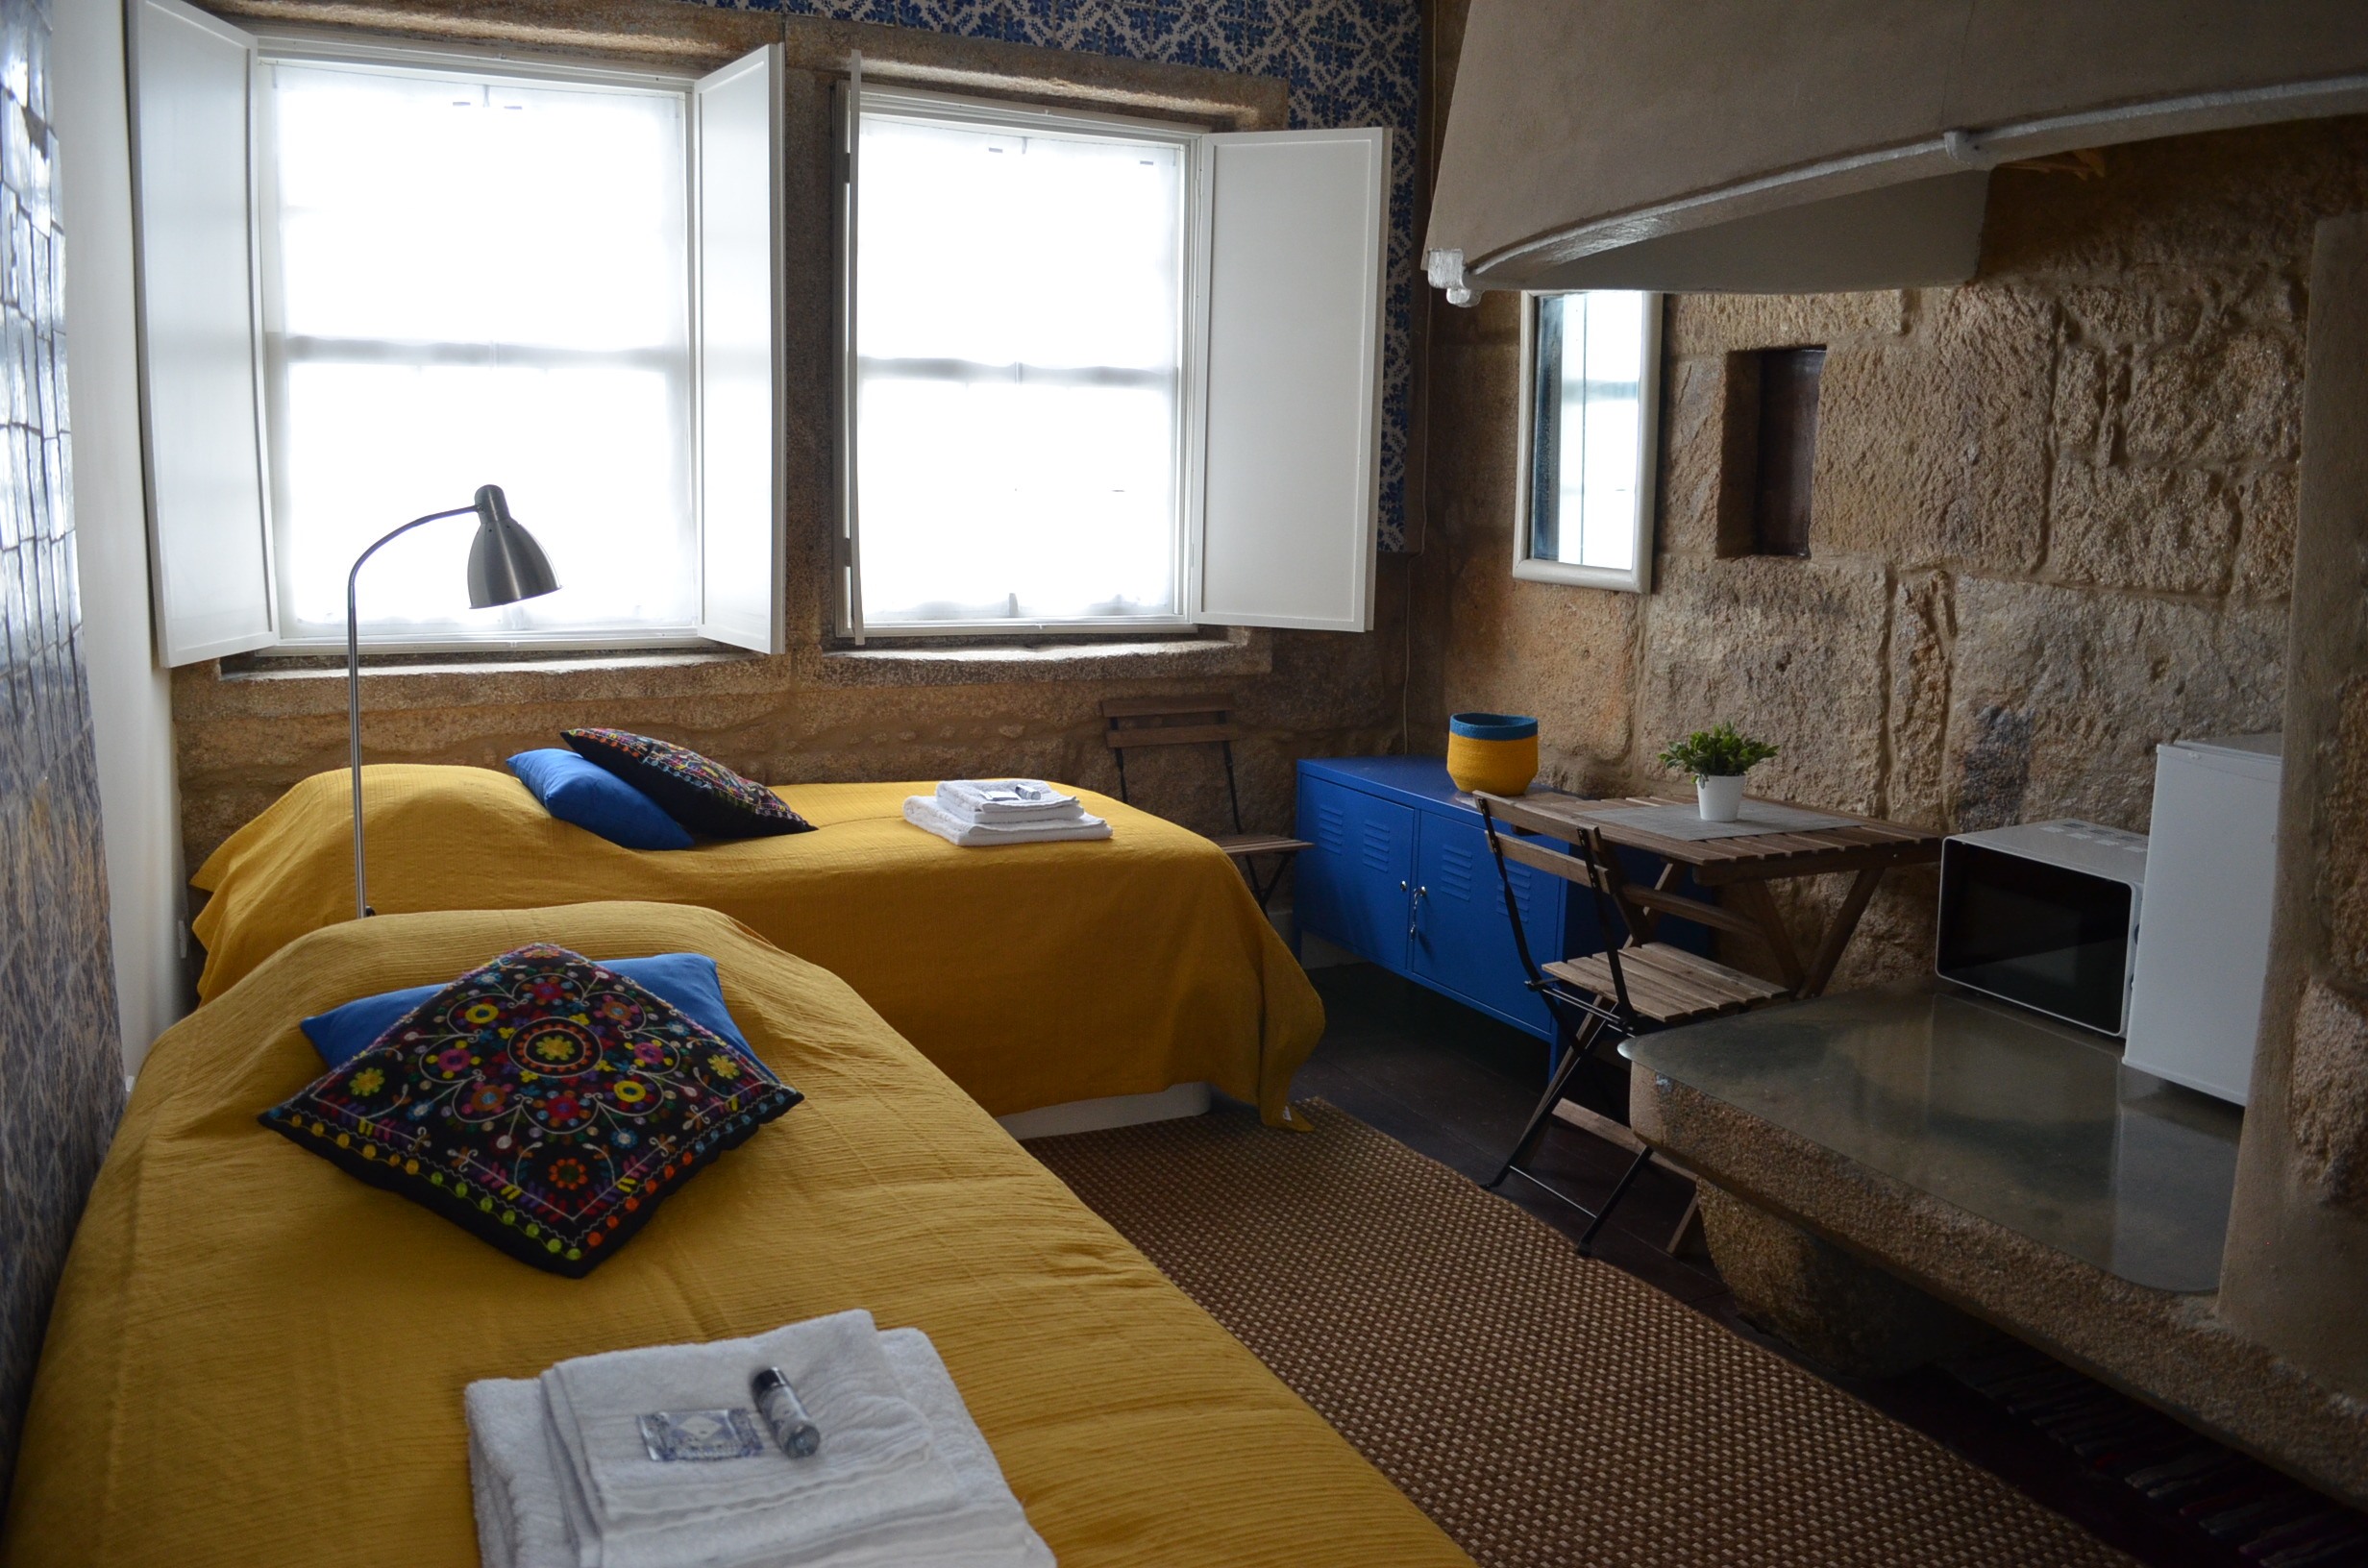 Casa Dom Azulejo - Local accommodations